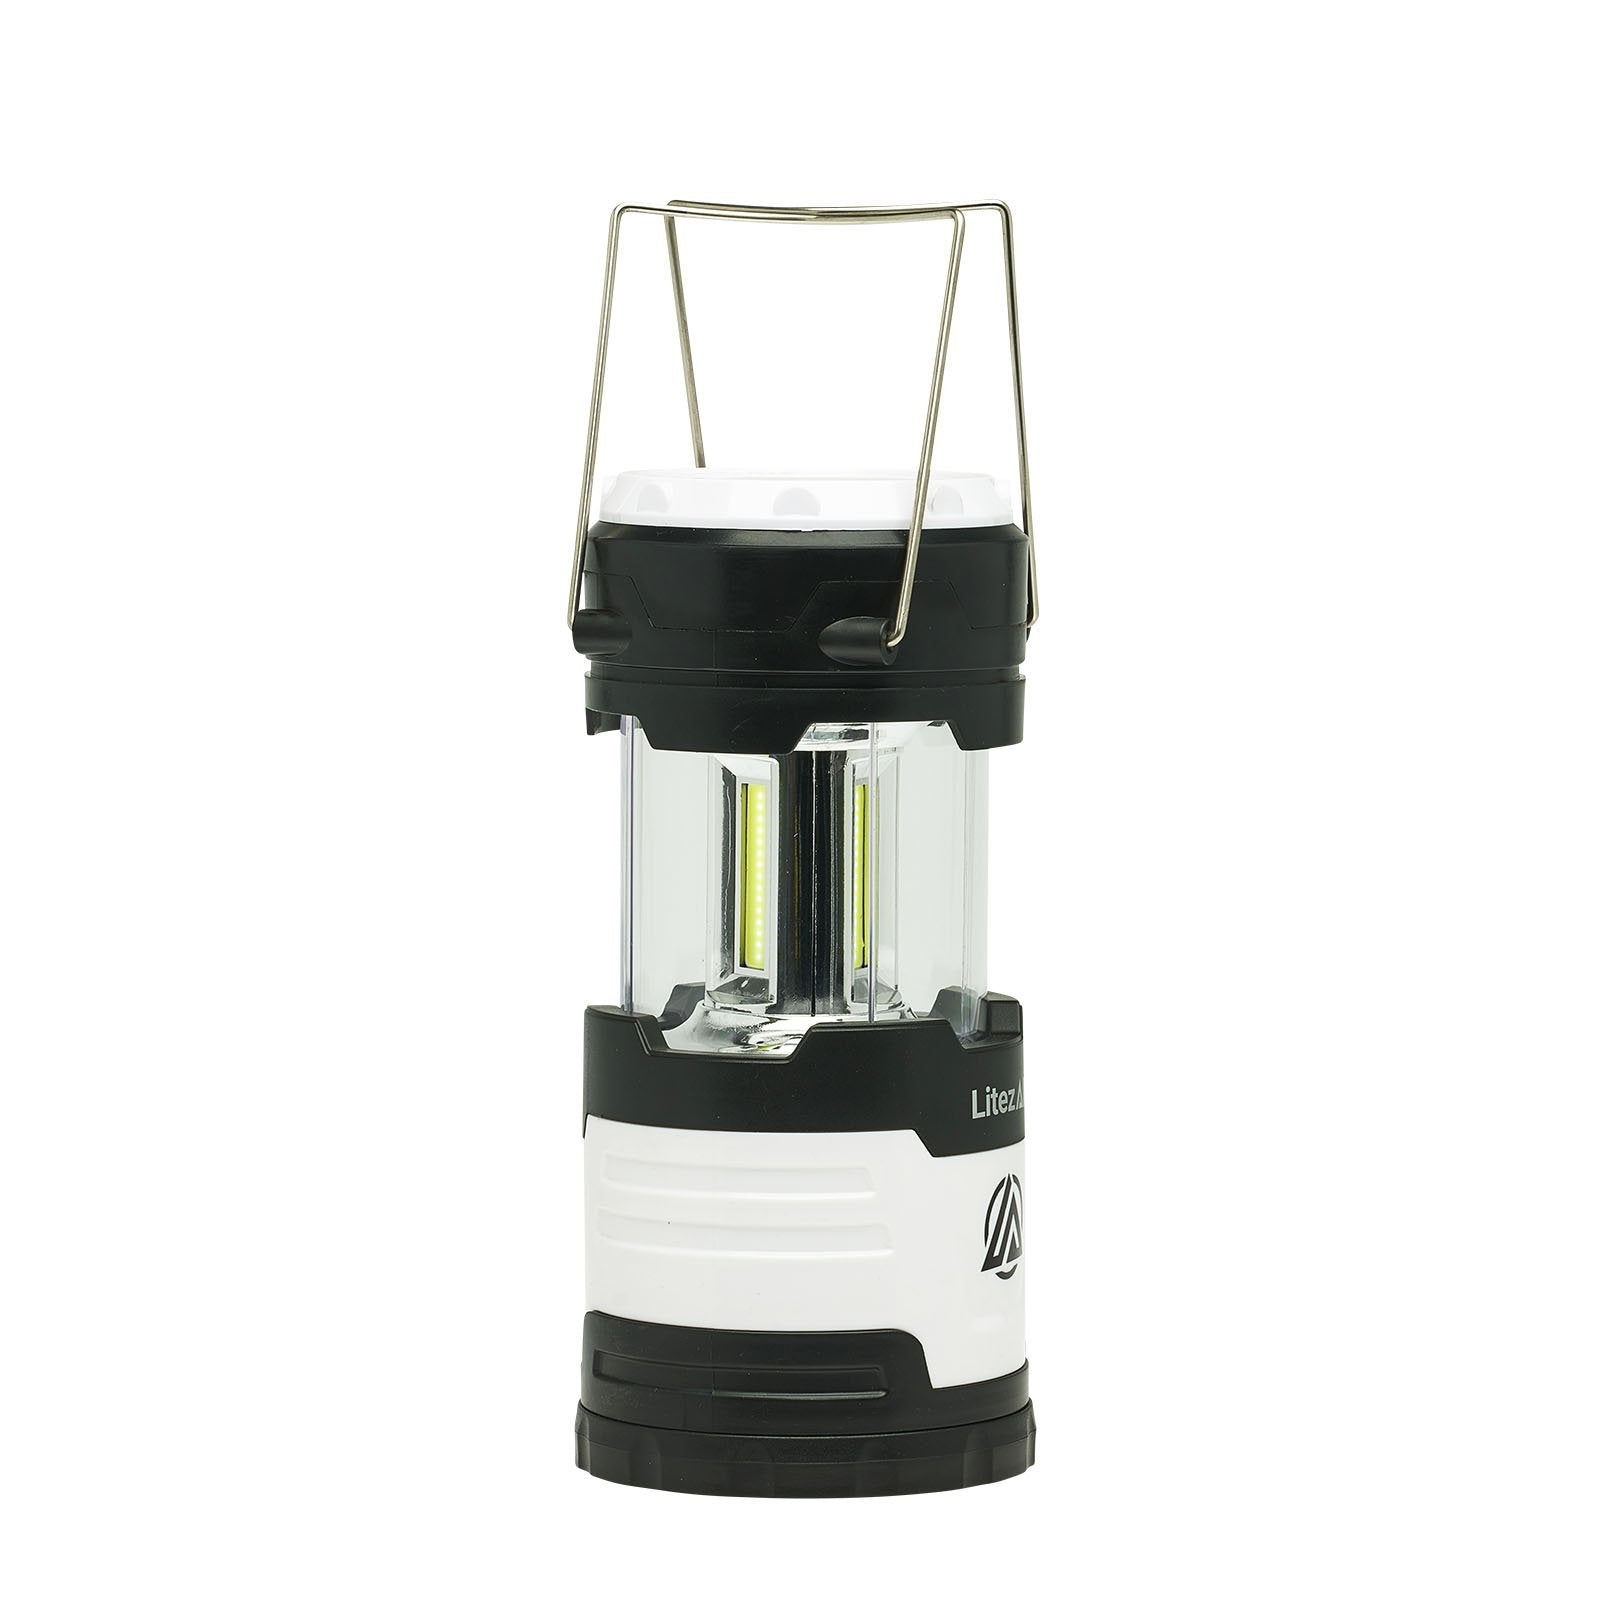 LitezAll Extendable COB LED Lantern - LitezAll - Lanterns - 12